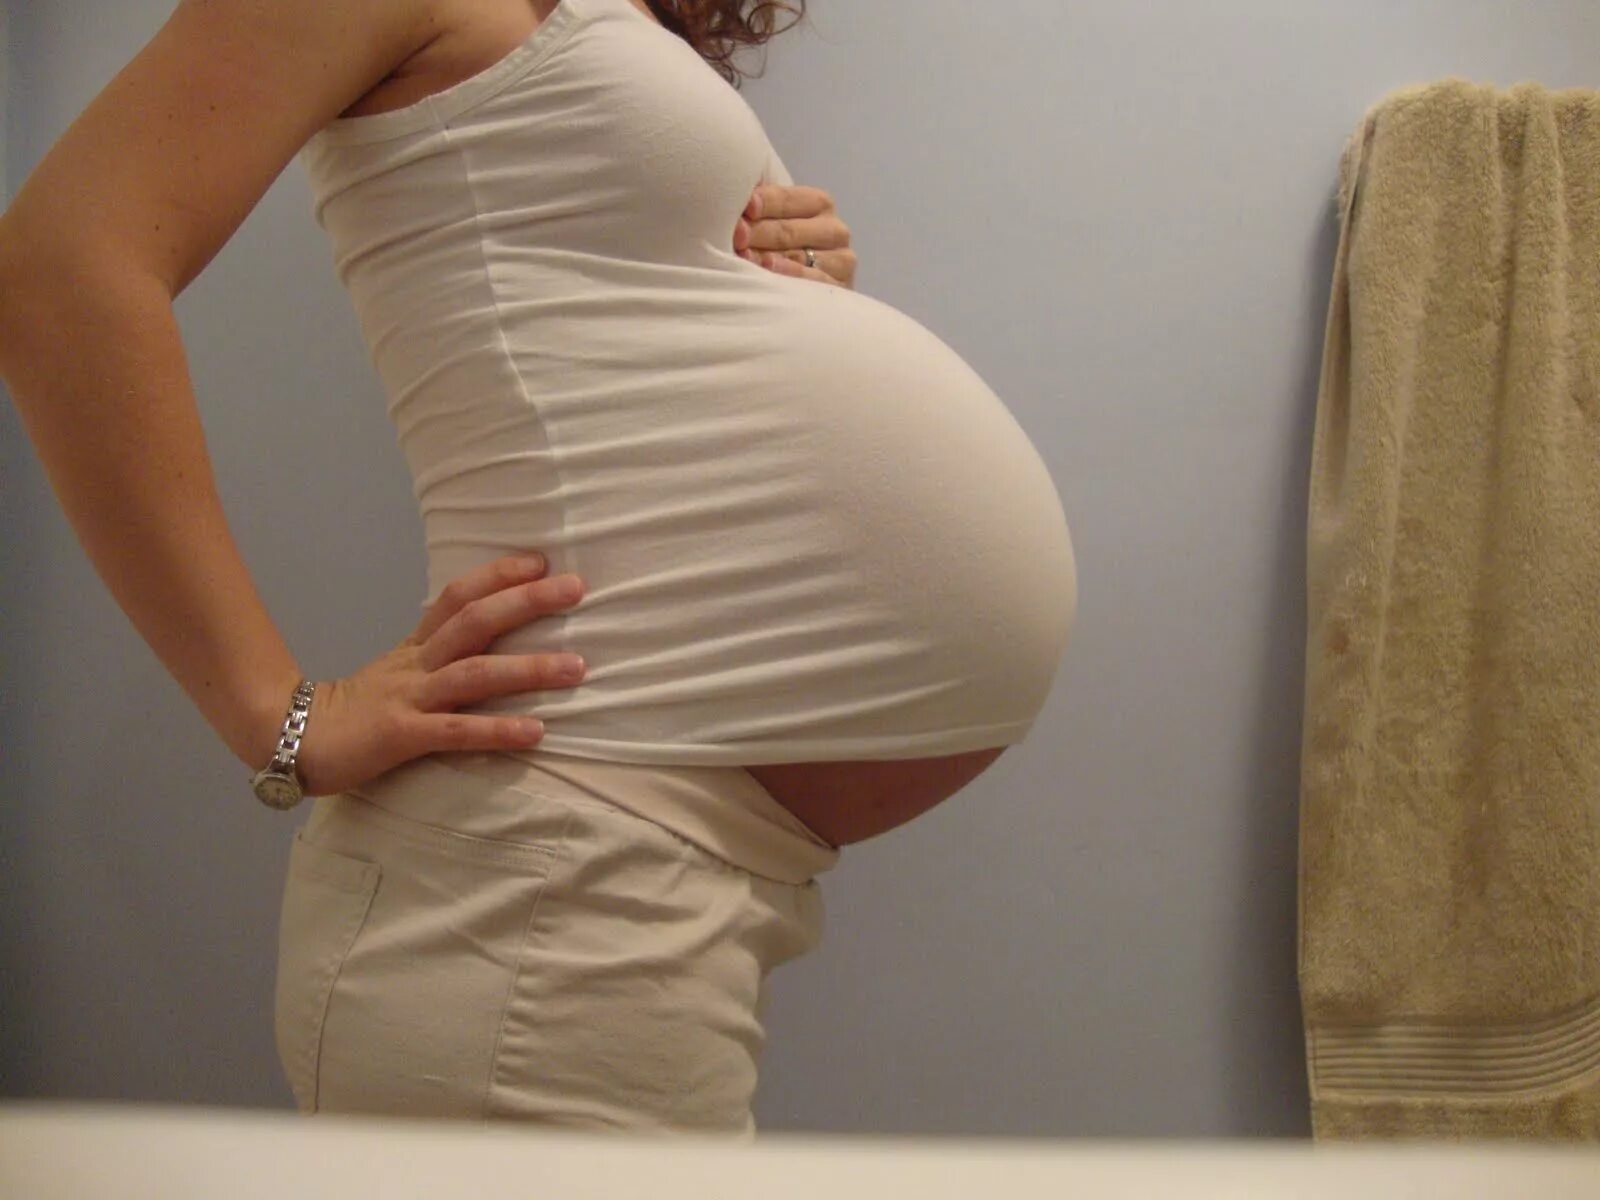 Живот на 9 месяце. Беременные на 9 месяце. Животы беременных женщин.